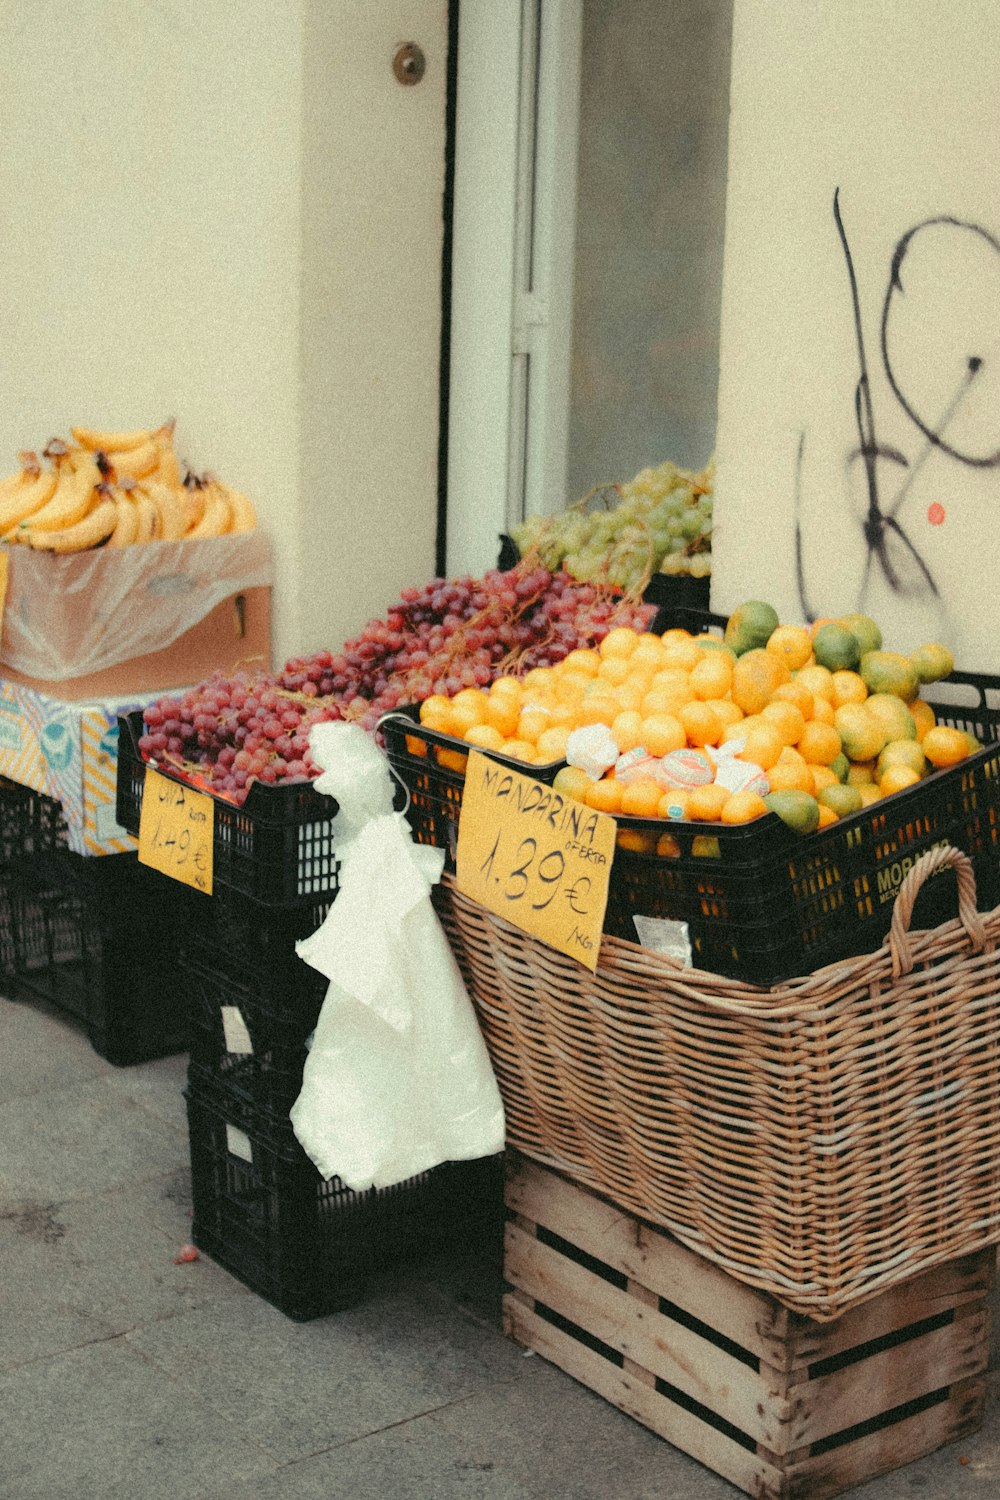 baskets of fruit on the sidewalk